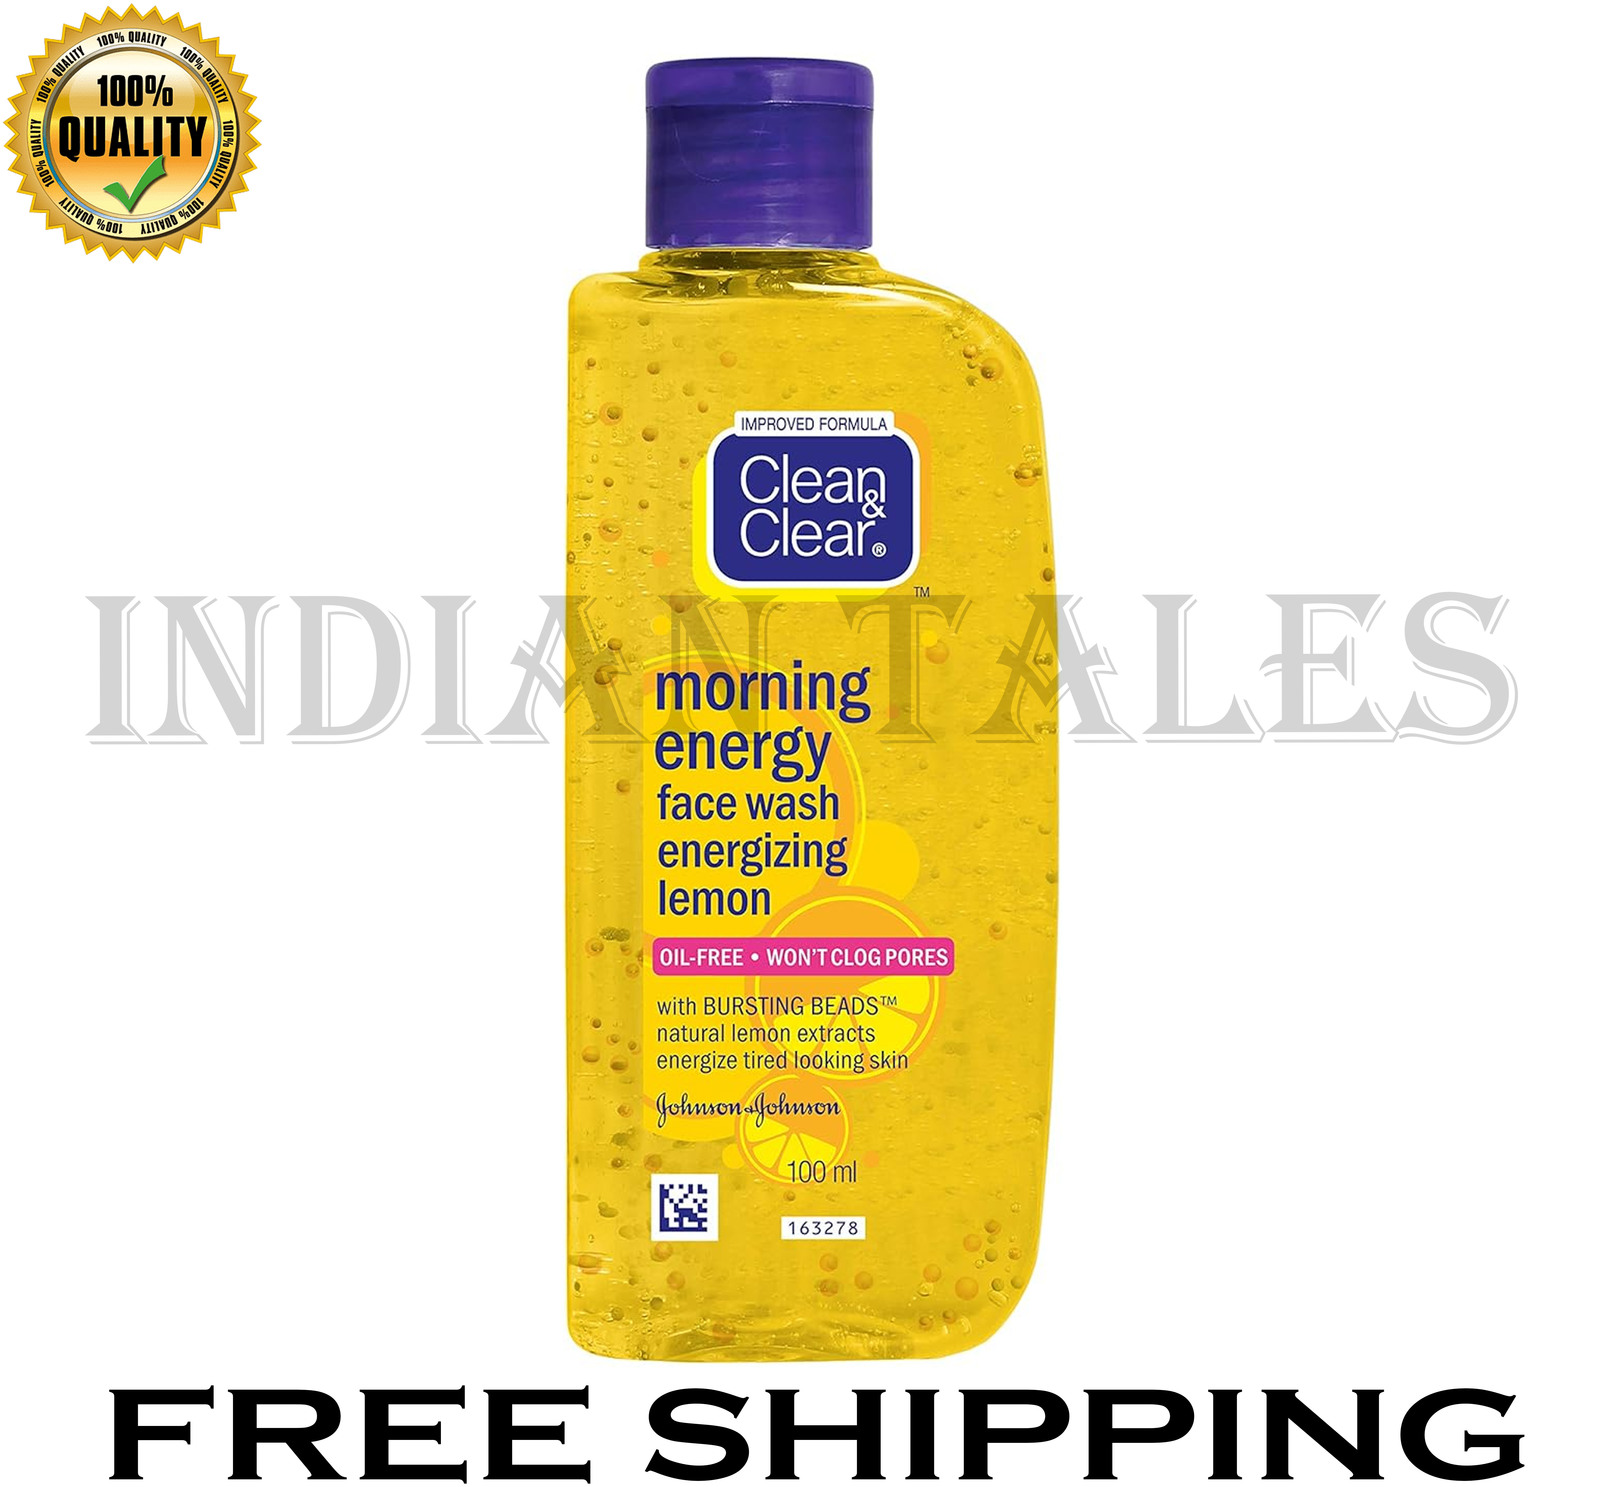  Clean & Clear Morning Energy Lemon Face Wash, 100ml  - $20.99